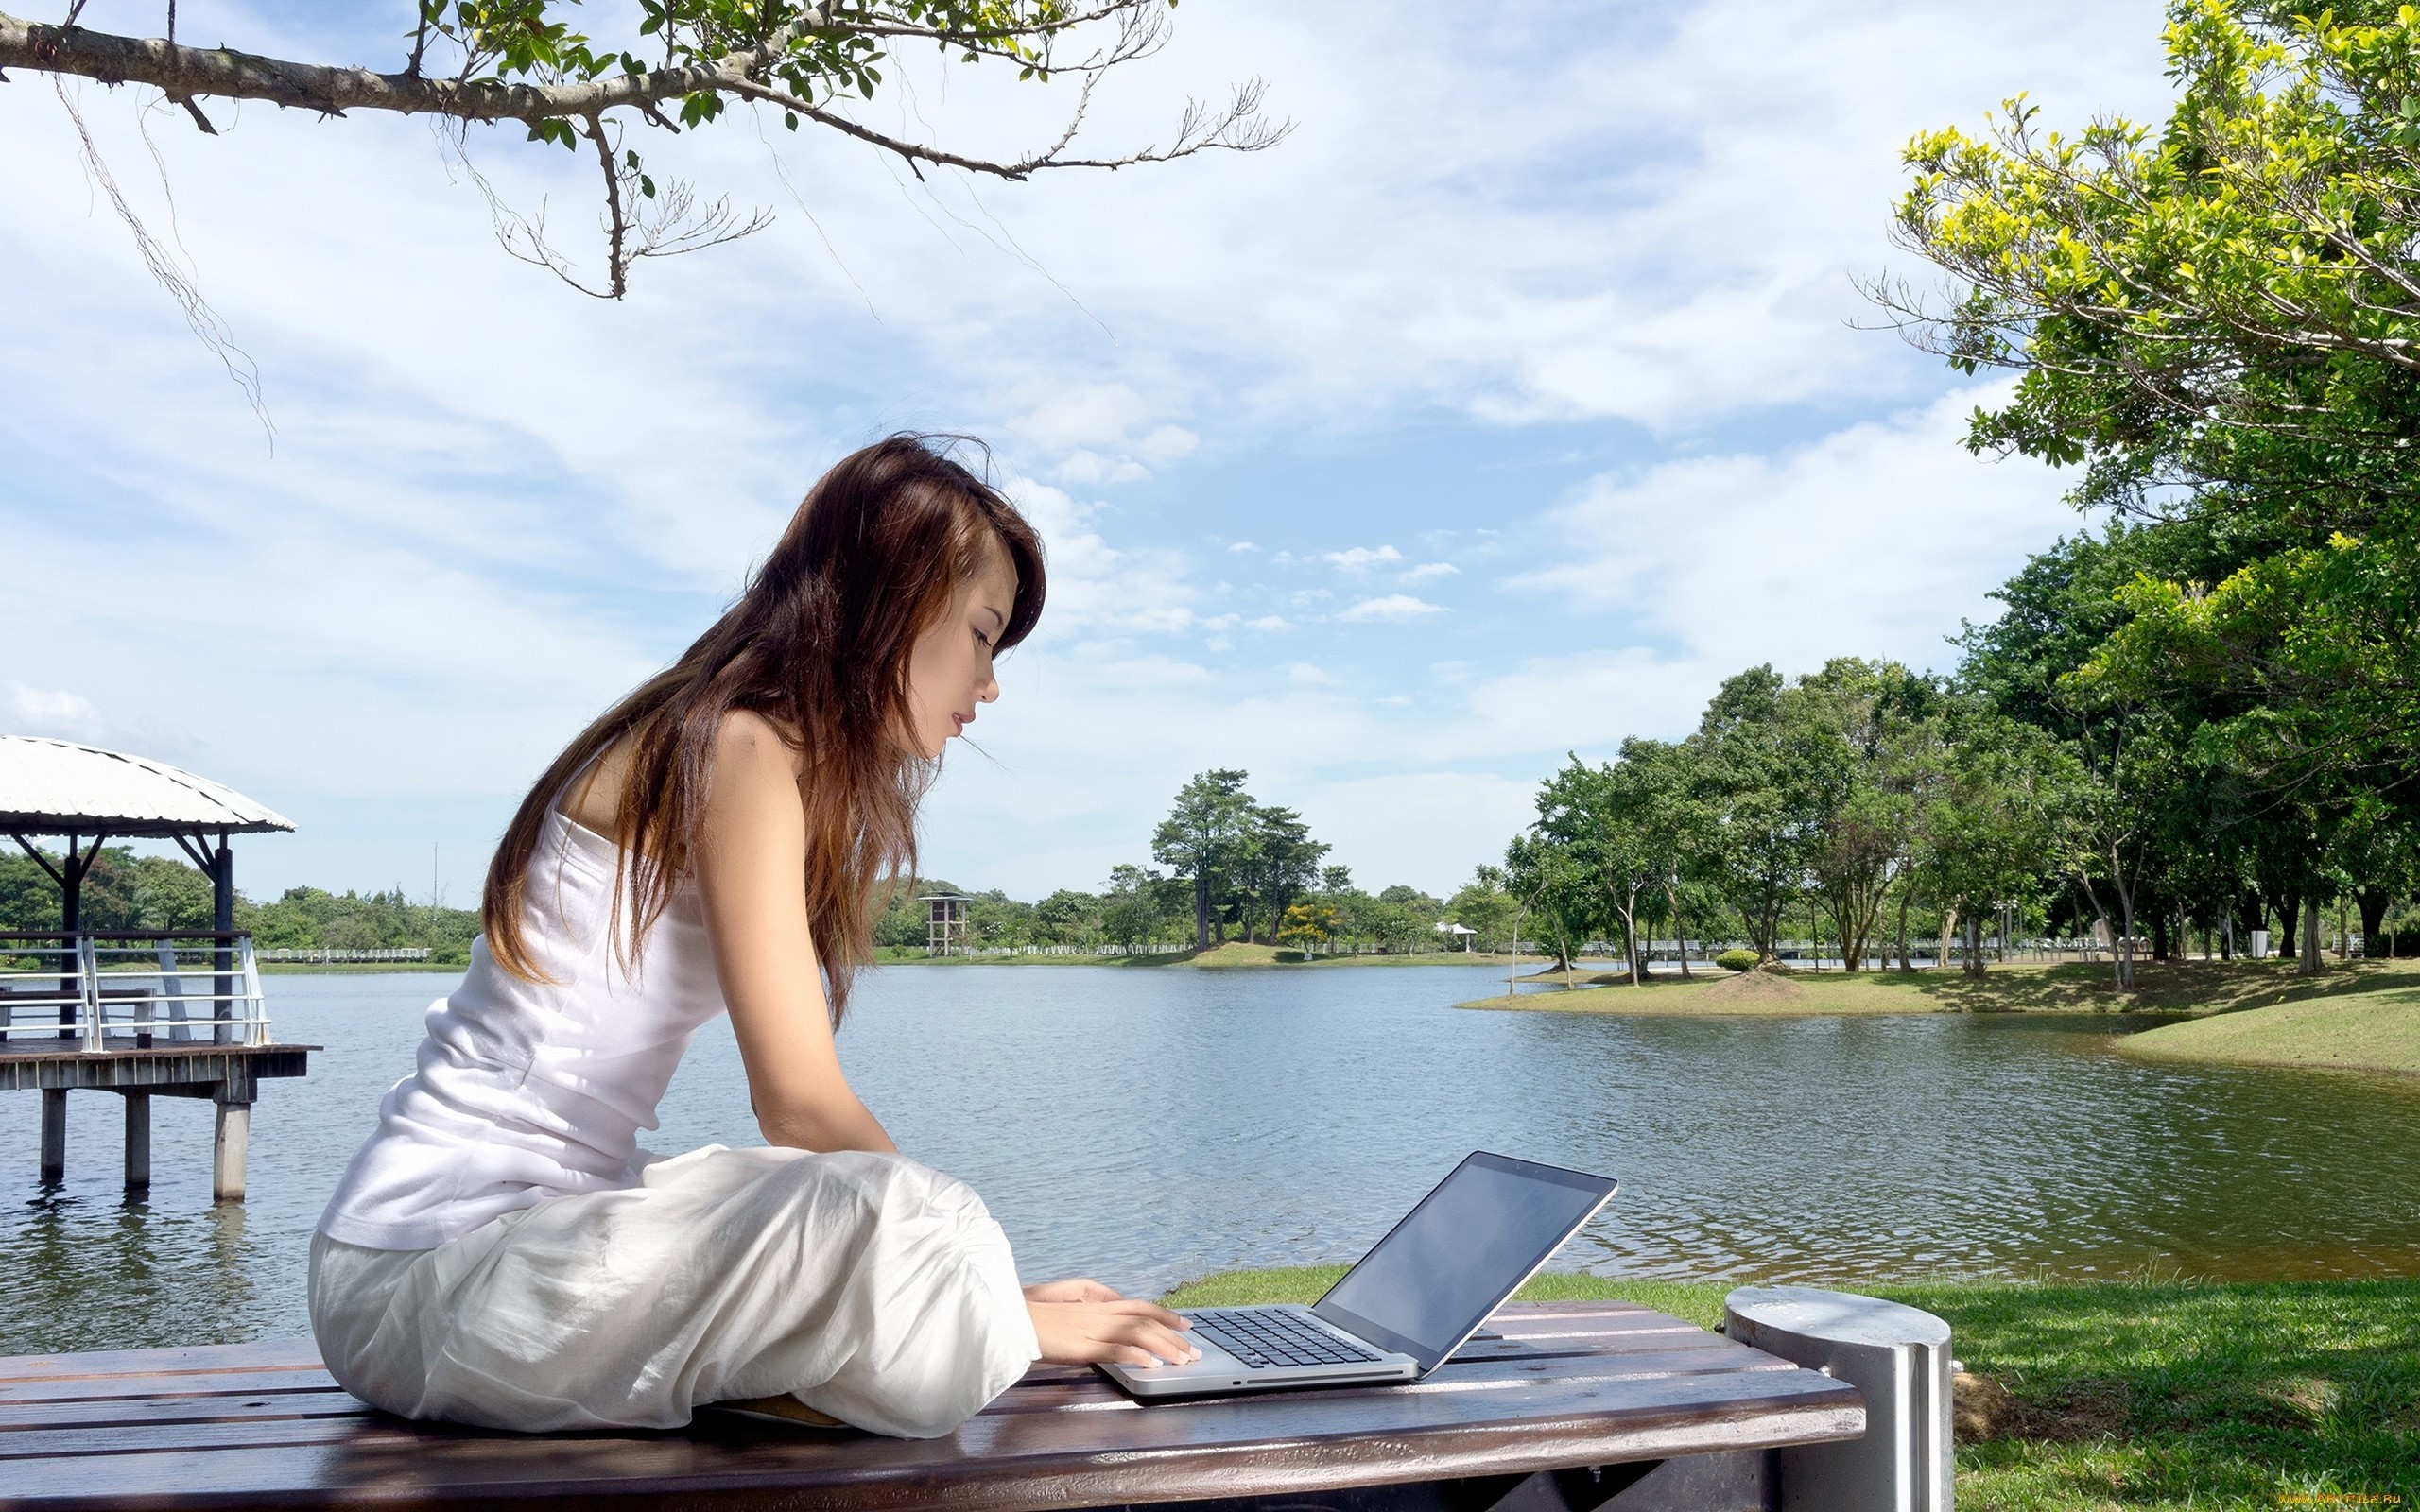 130125 women model brunette long hair women outdoors white dress Asian trees laptop sitting water - How to Plan a Wedding